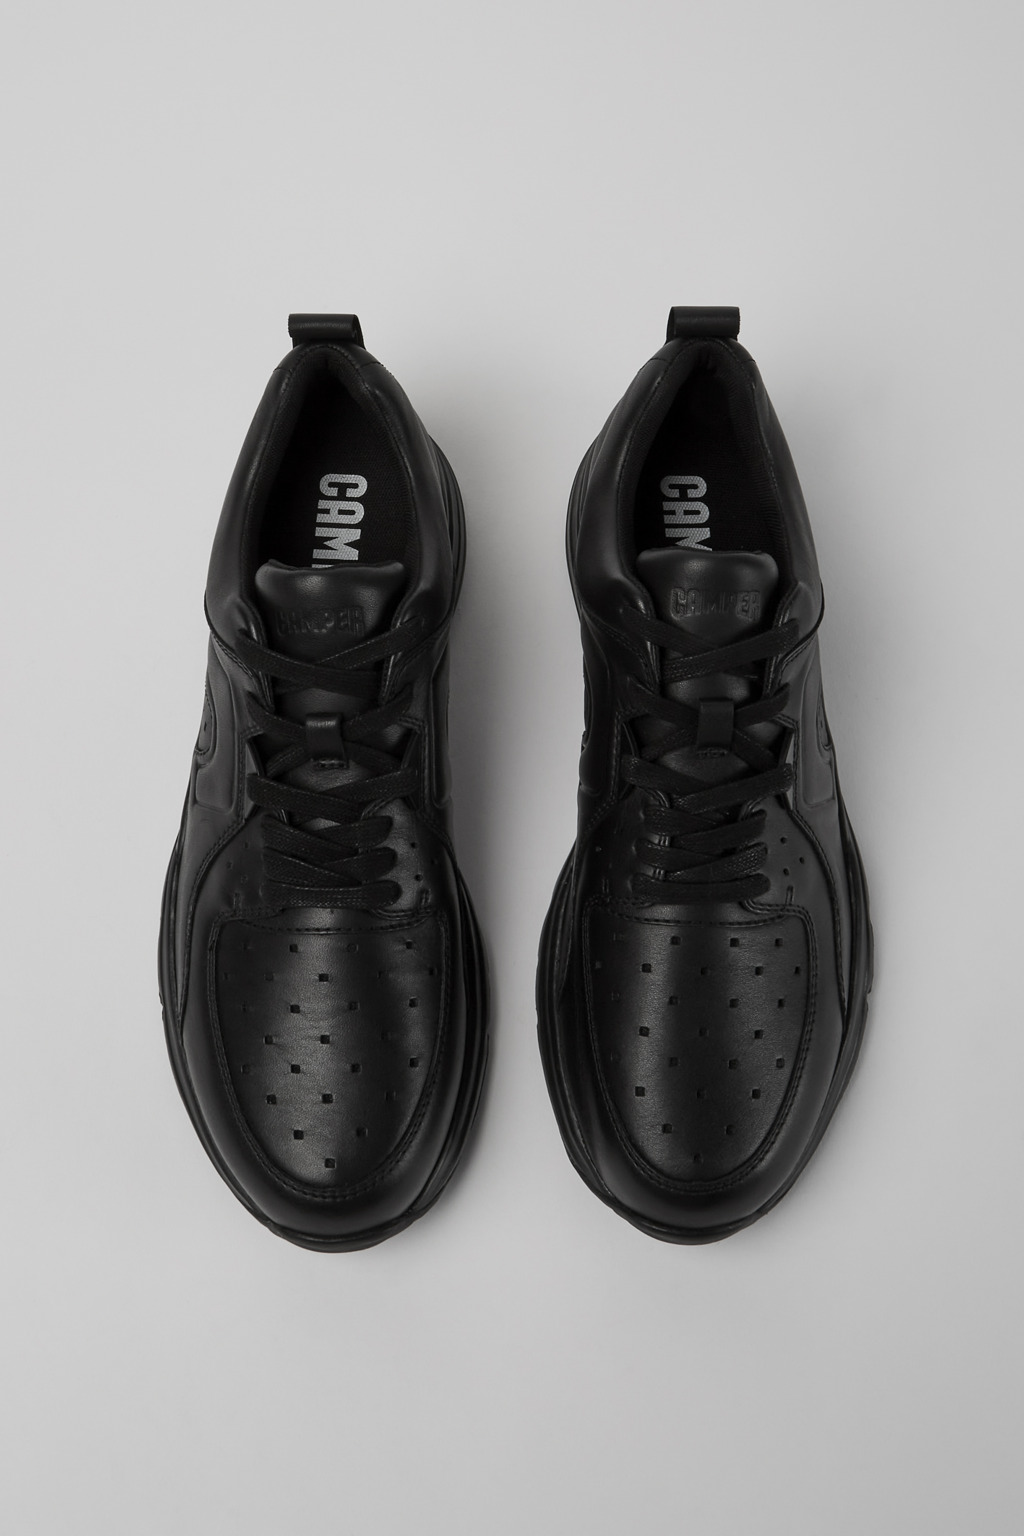 Drift Black Sneakers for Men - Spring/Summer collection - Camper 